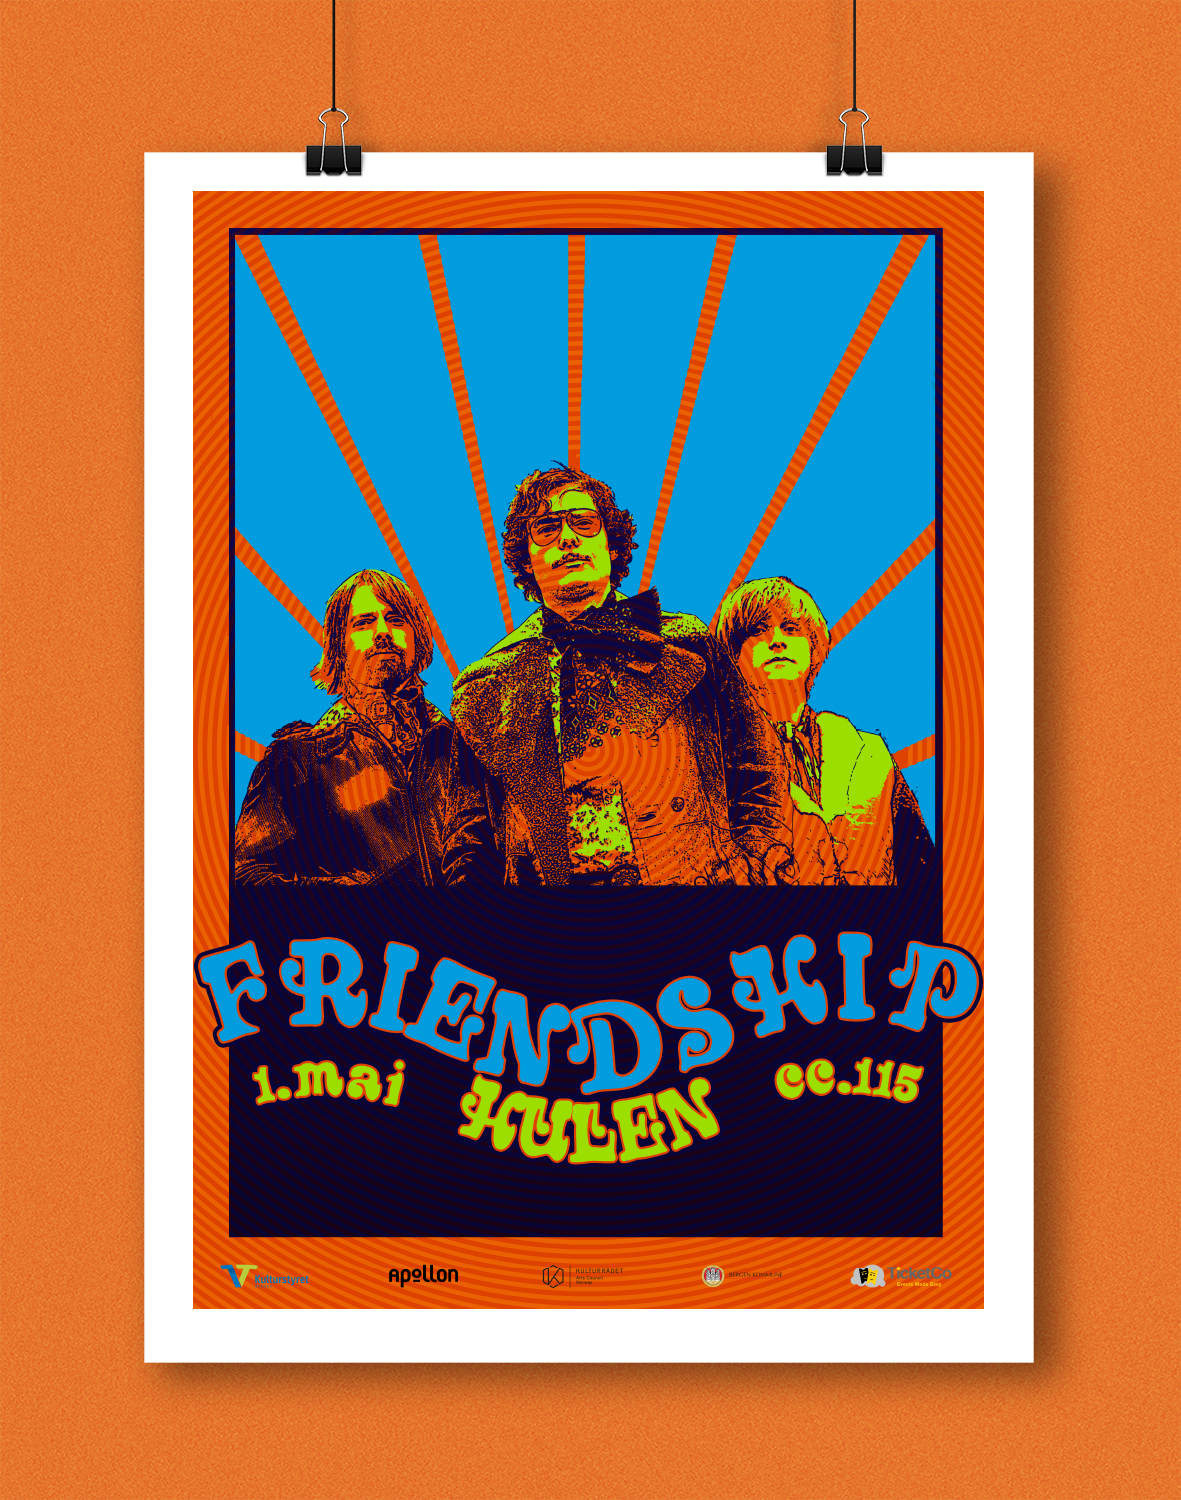 poster hulen Poster Design concert norway Event